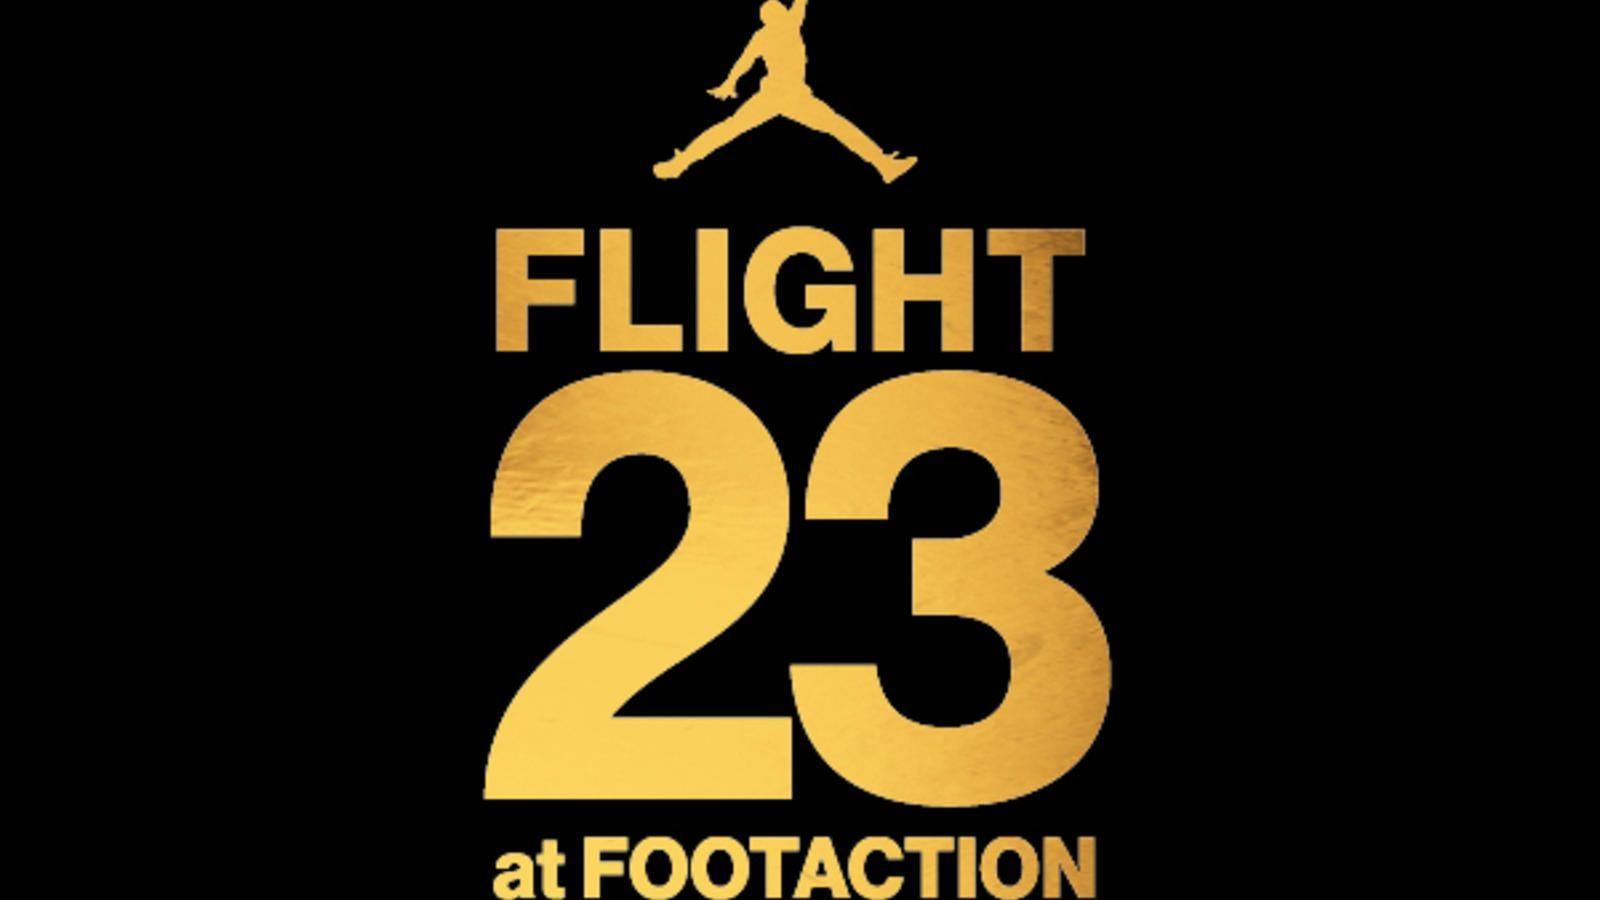 Air Jordan Flight Logo - Flight 23 at Footaction to be First North America Jordan-only retail ...